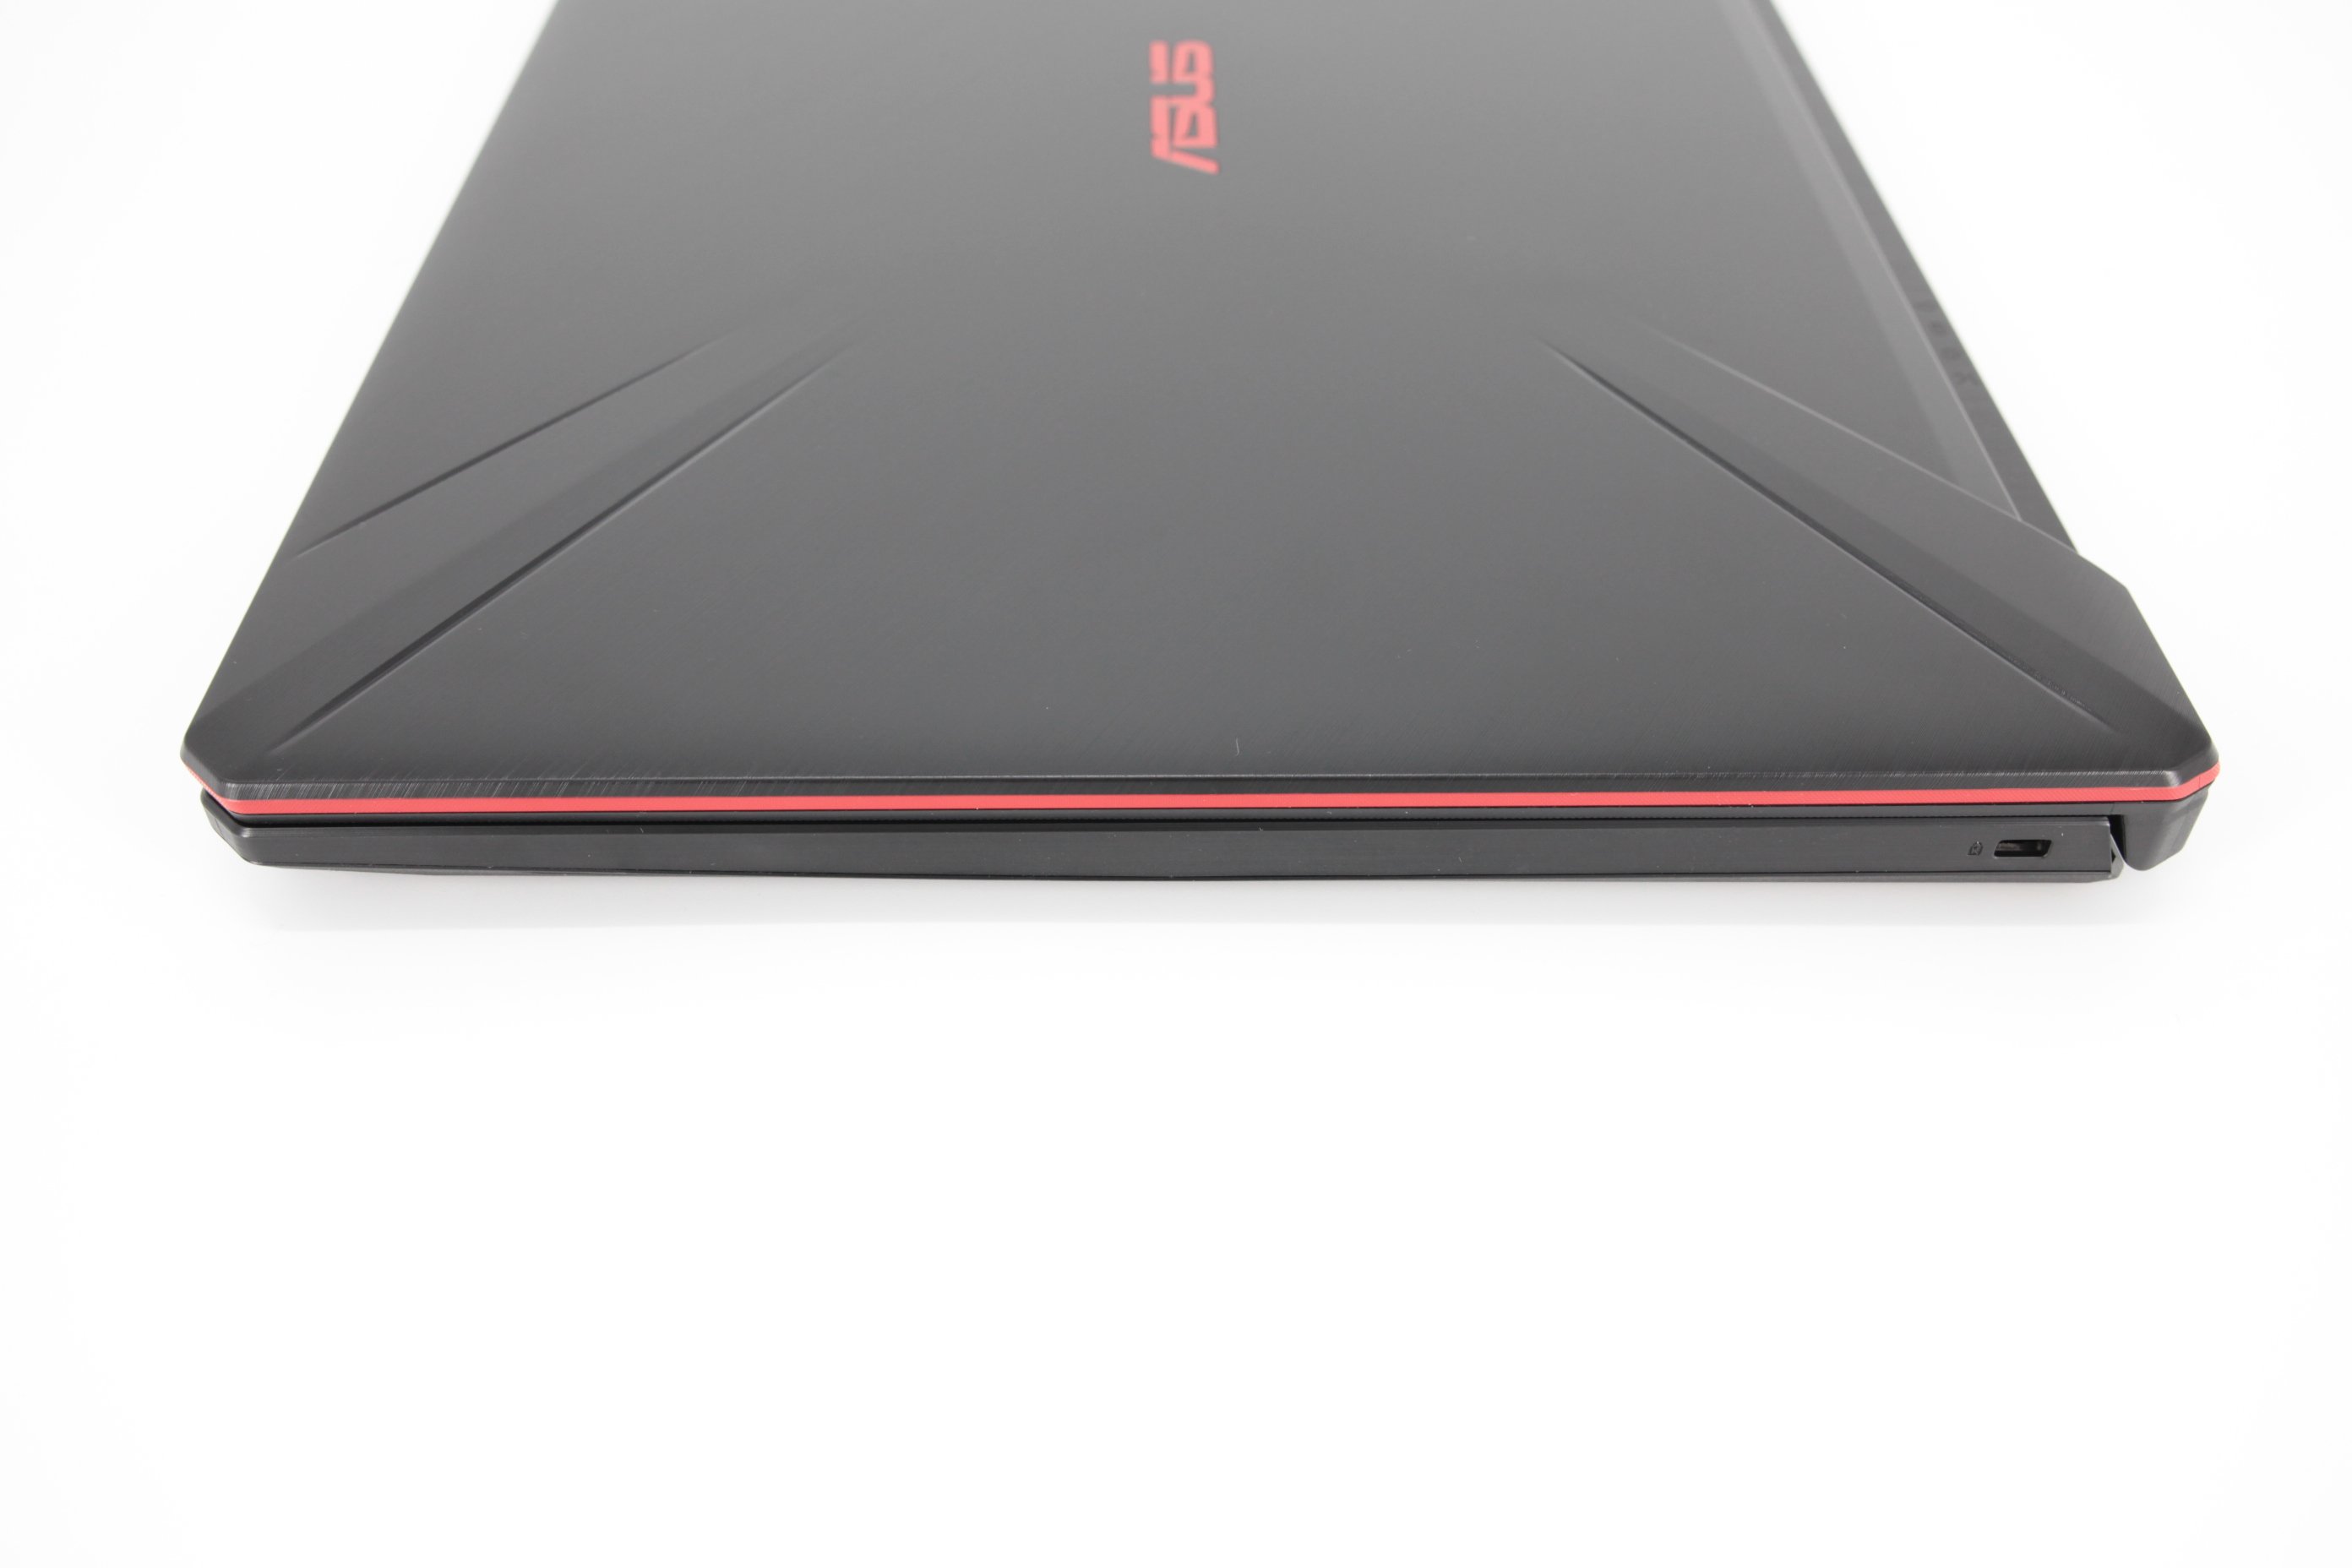 ASUS 17.3" FX705DY Gaming Laptop: Ryzen R5-3550H, 8GB RAM RX 560X 4GB, 128GB+HDD - CruiseTech